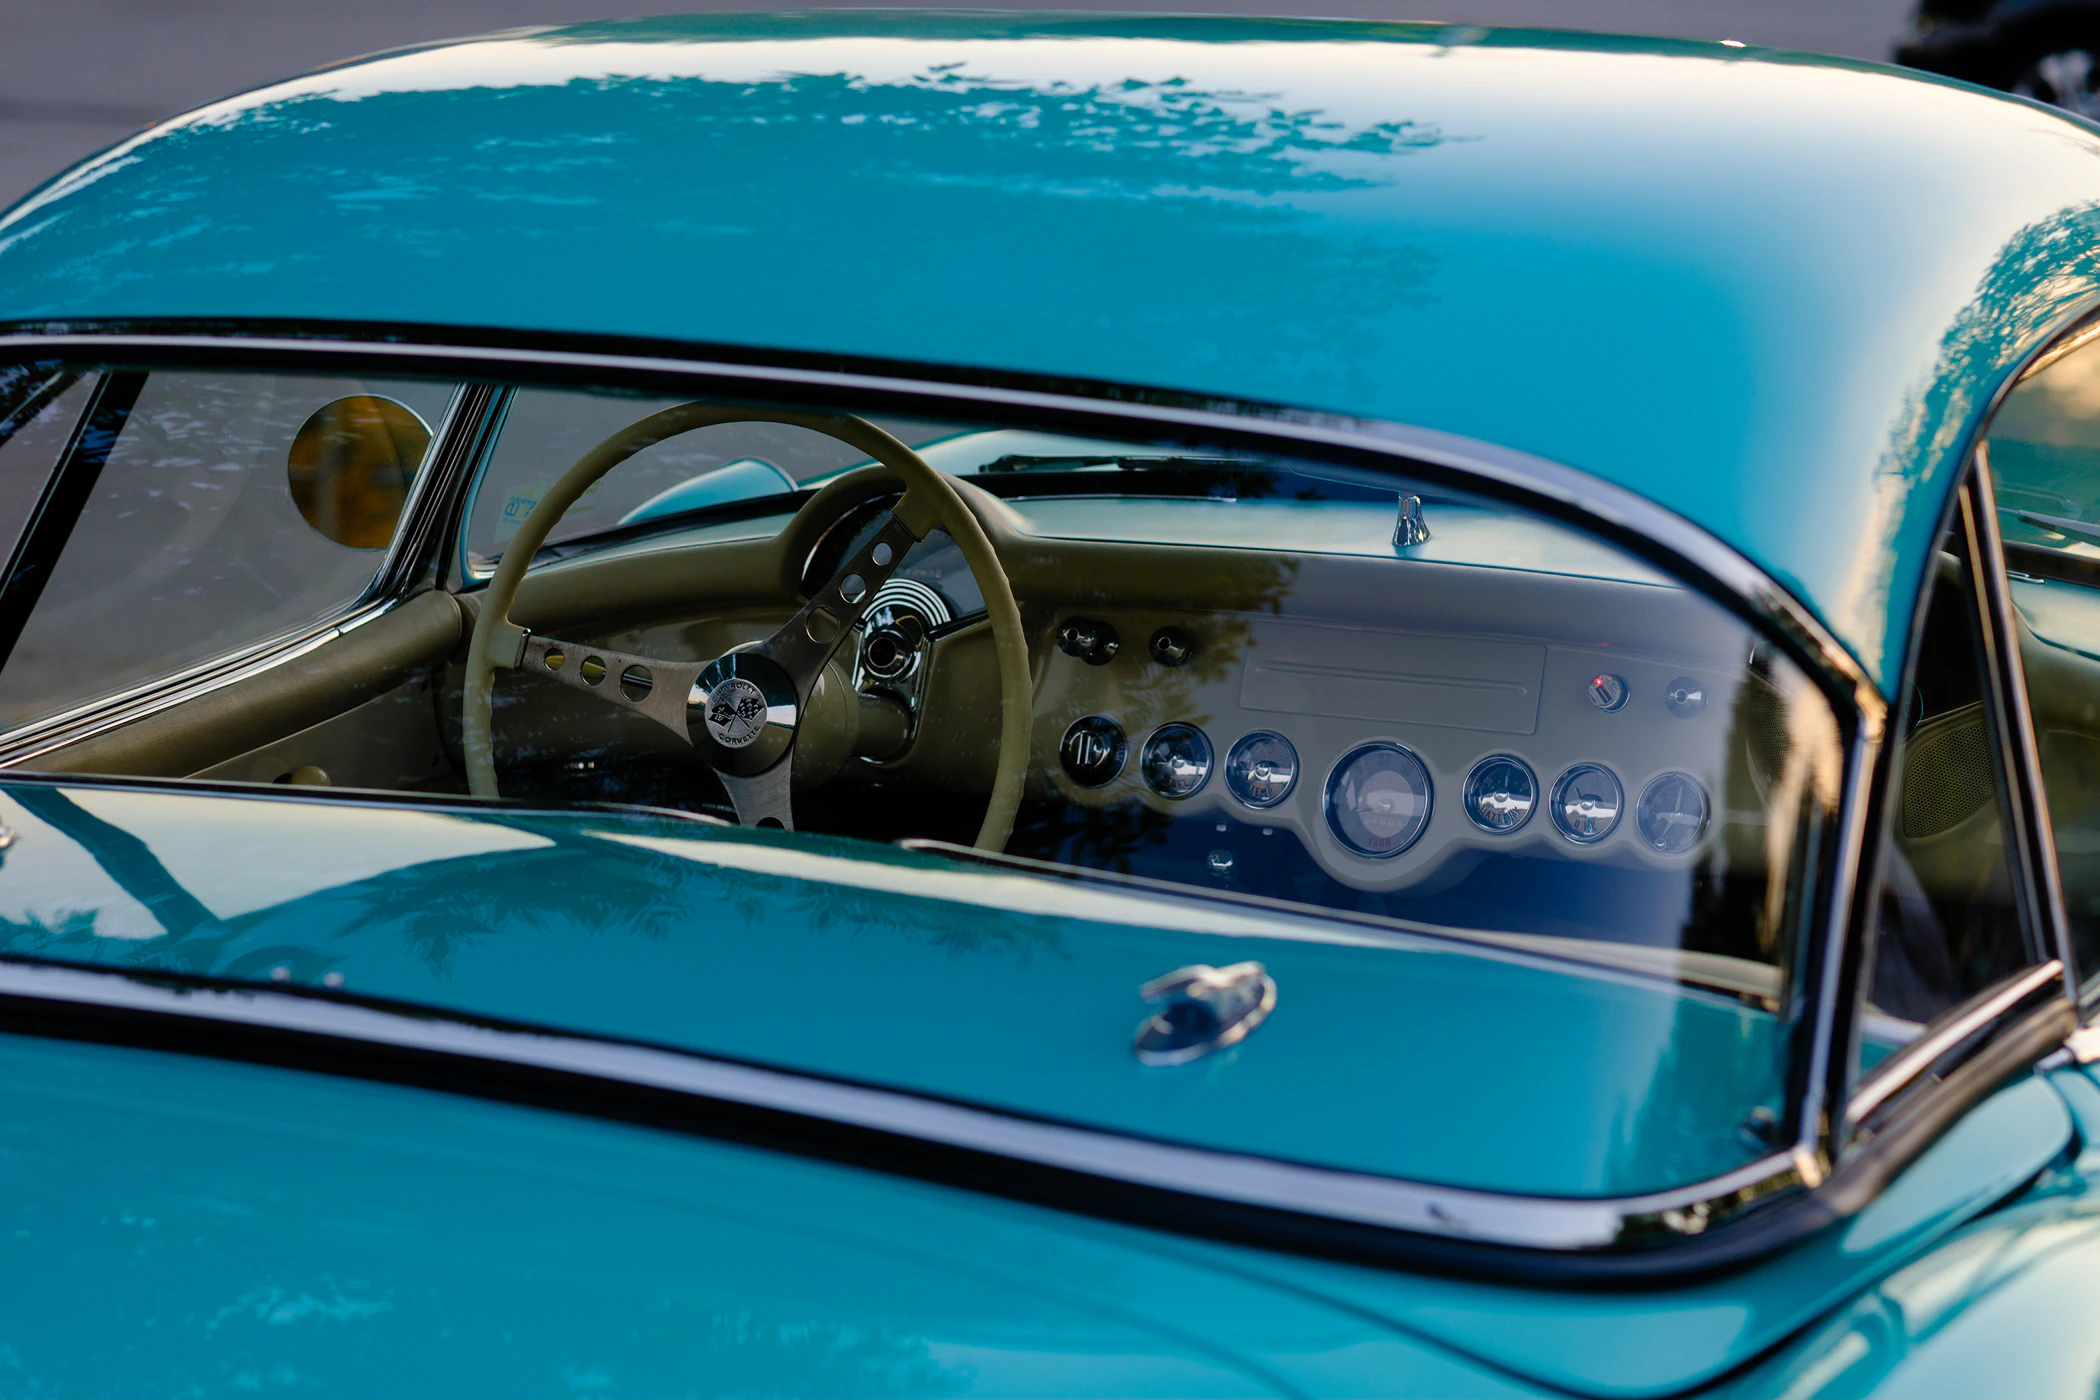 Classic Chevrolet Corvette during blue hour twilight.